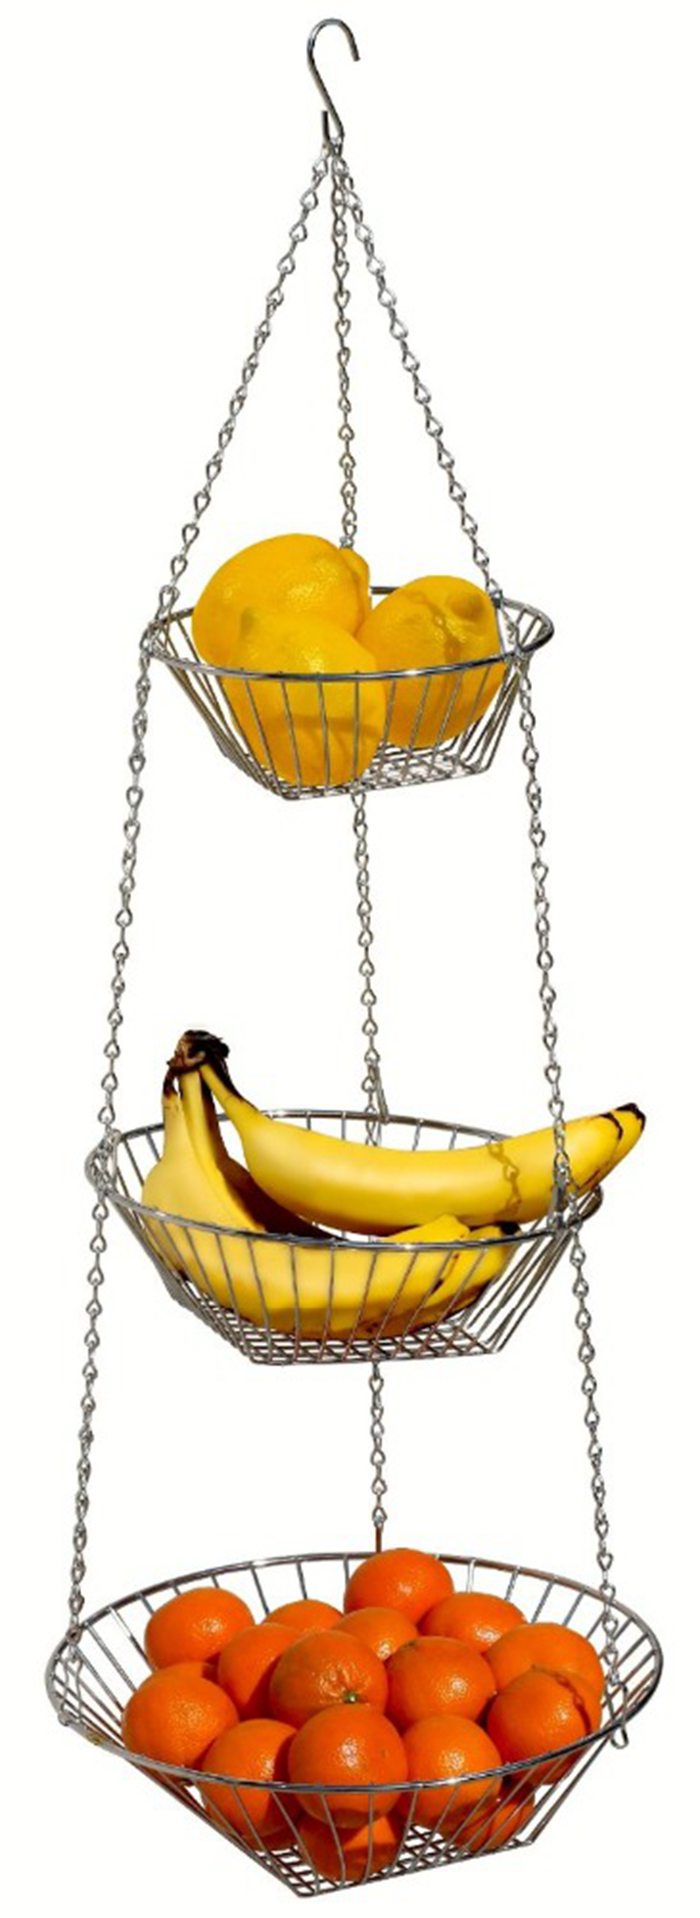 3 Tier Wire Hanging Fruit Basket